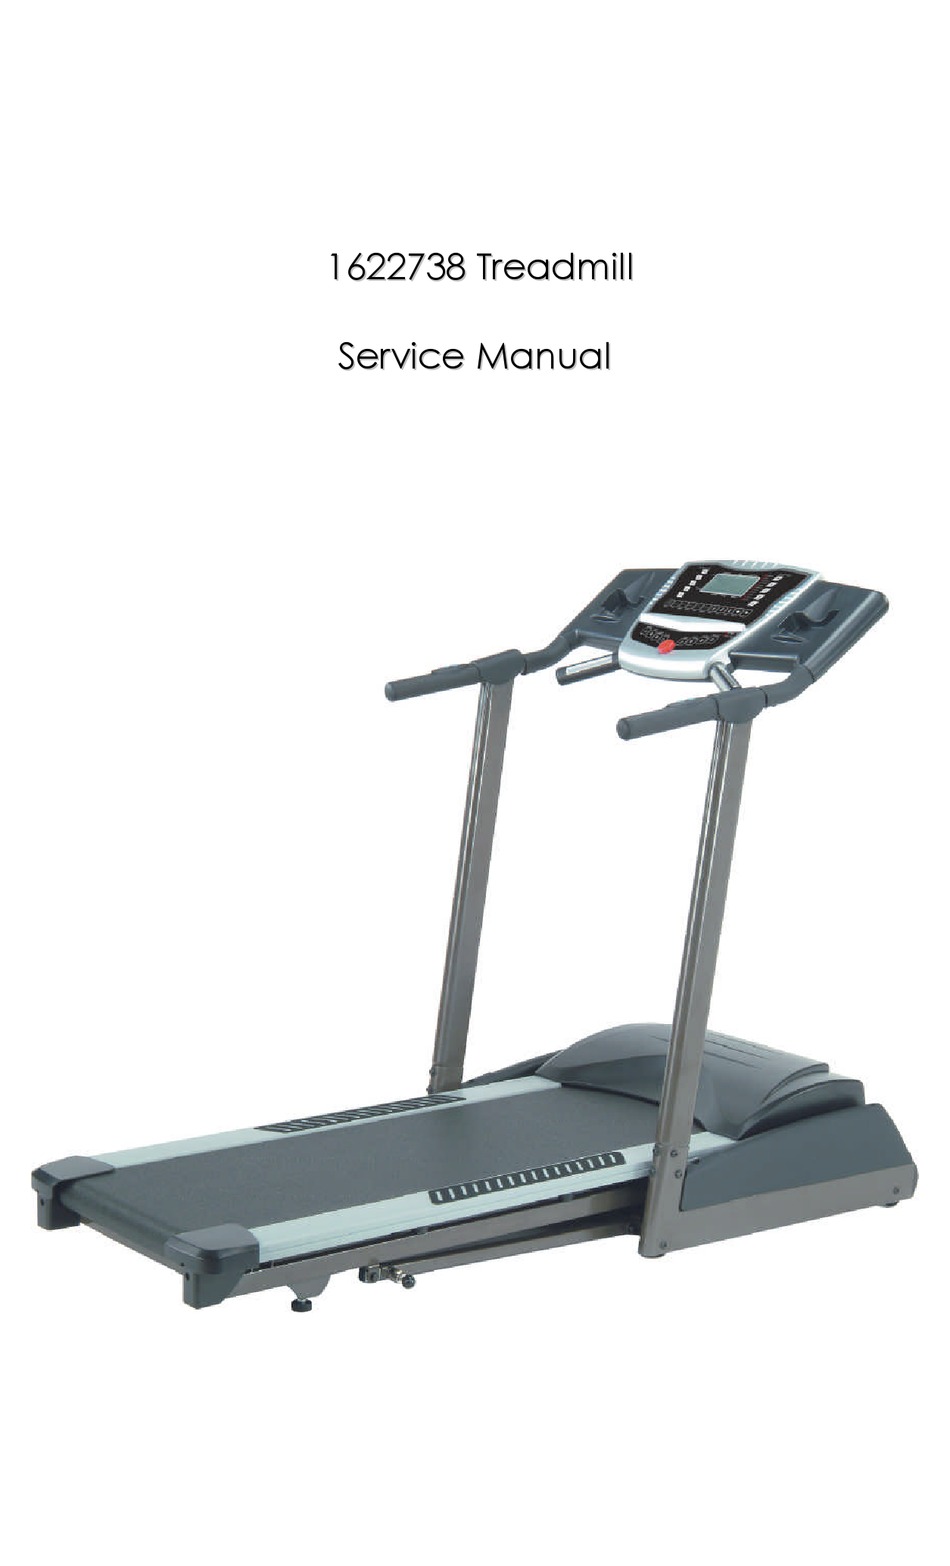 dyaco treadmill model 909 manual